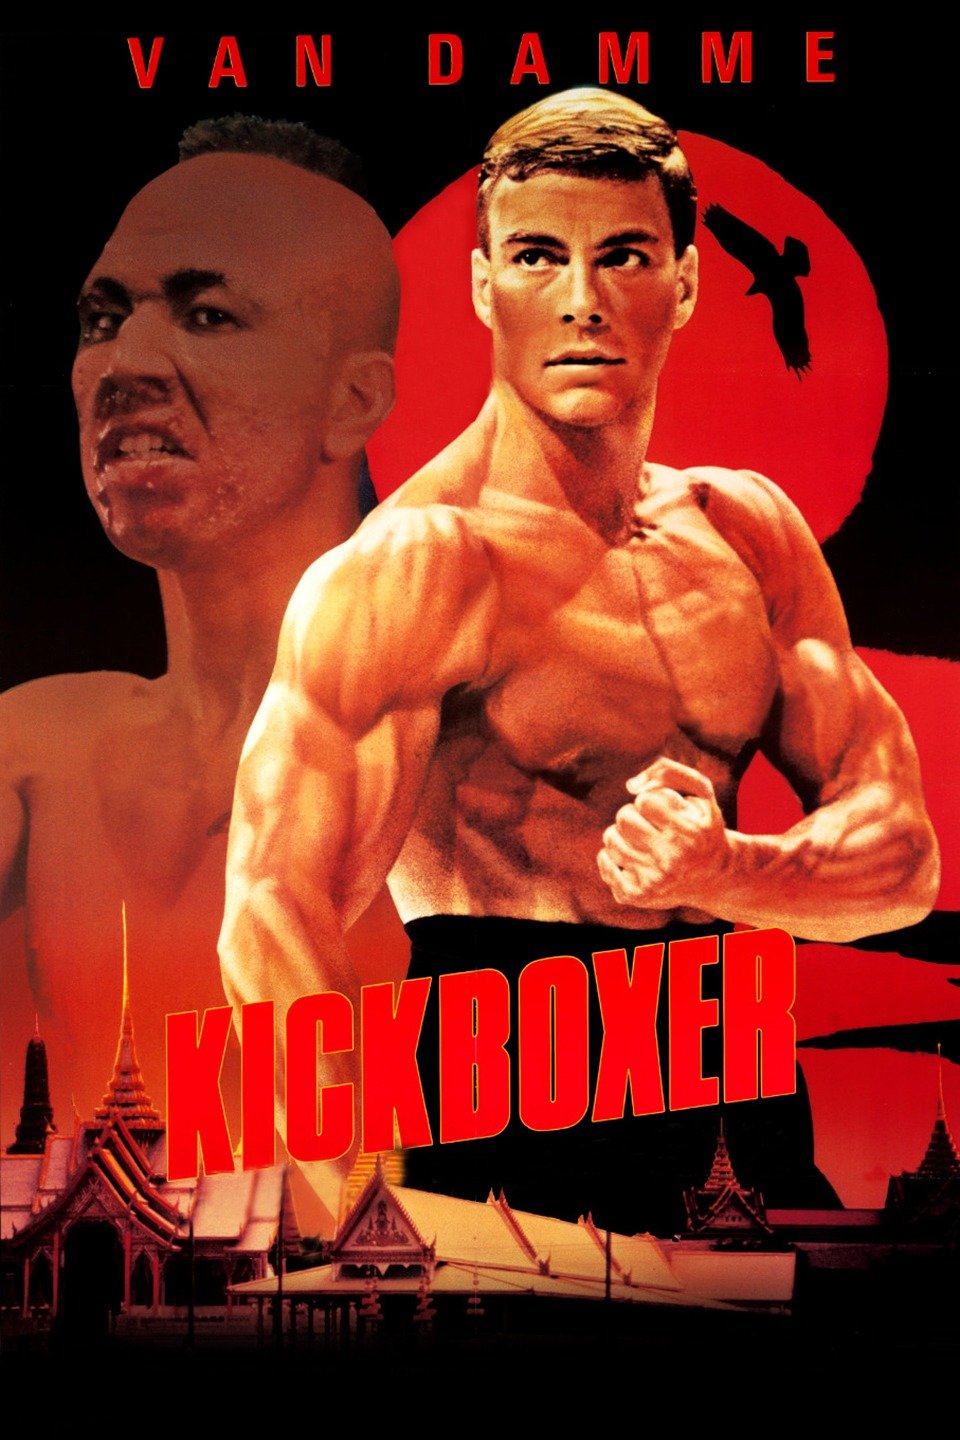 FULL MOVIE: Kickboxer (1989)